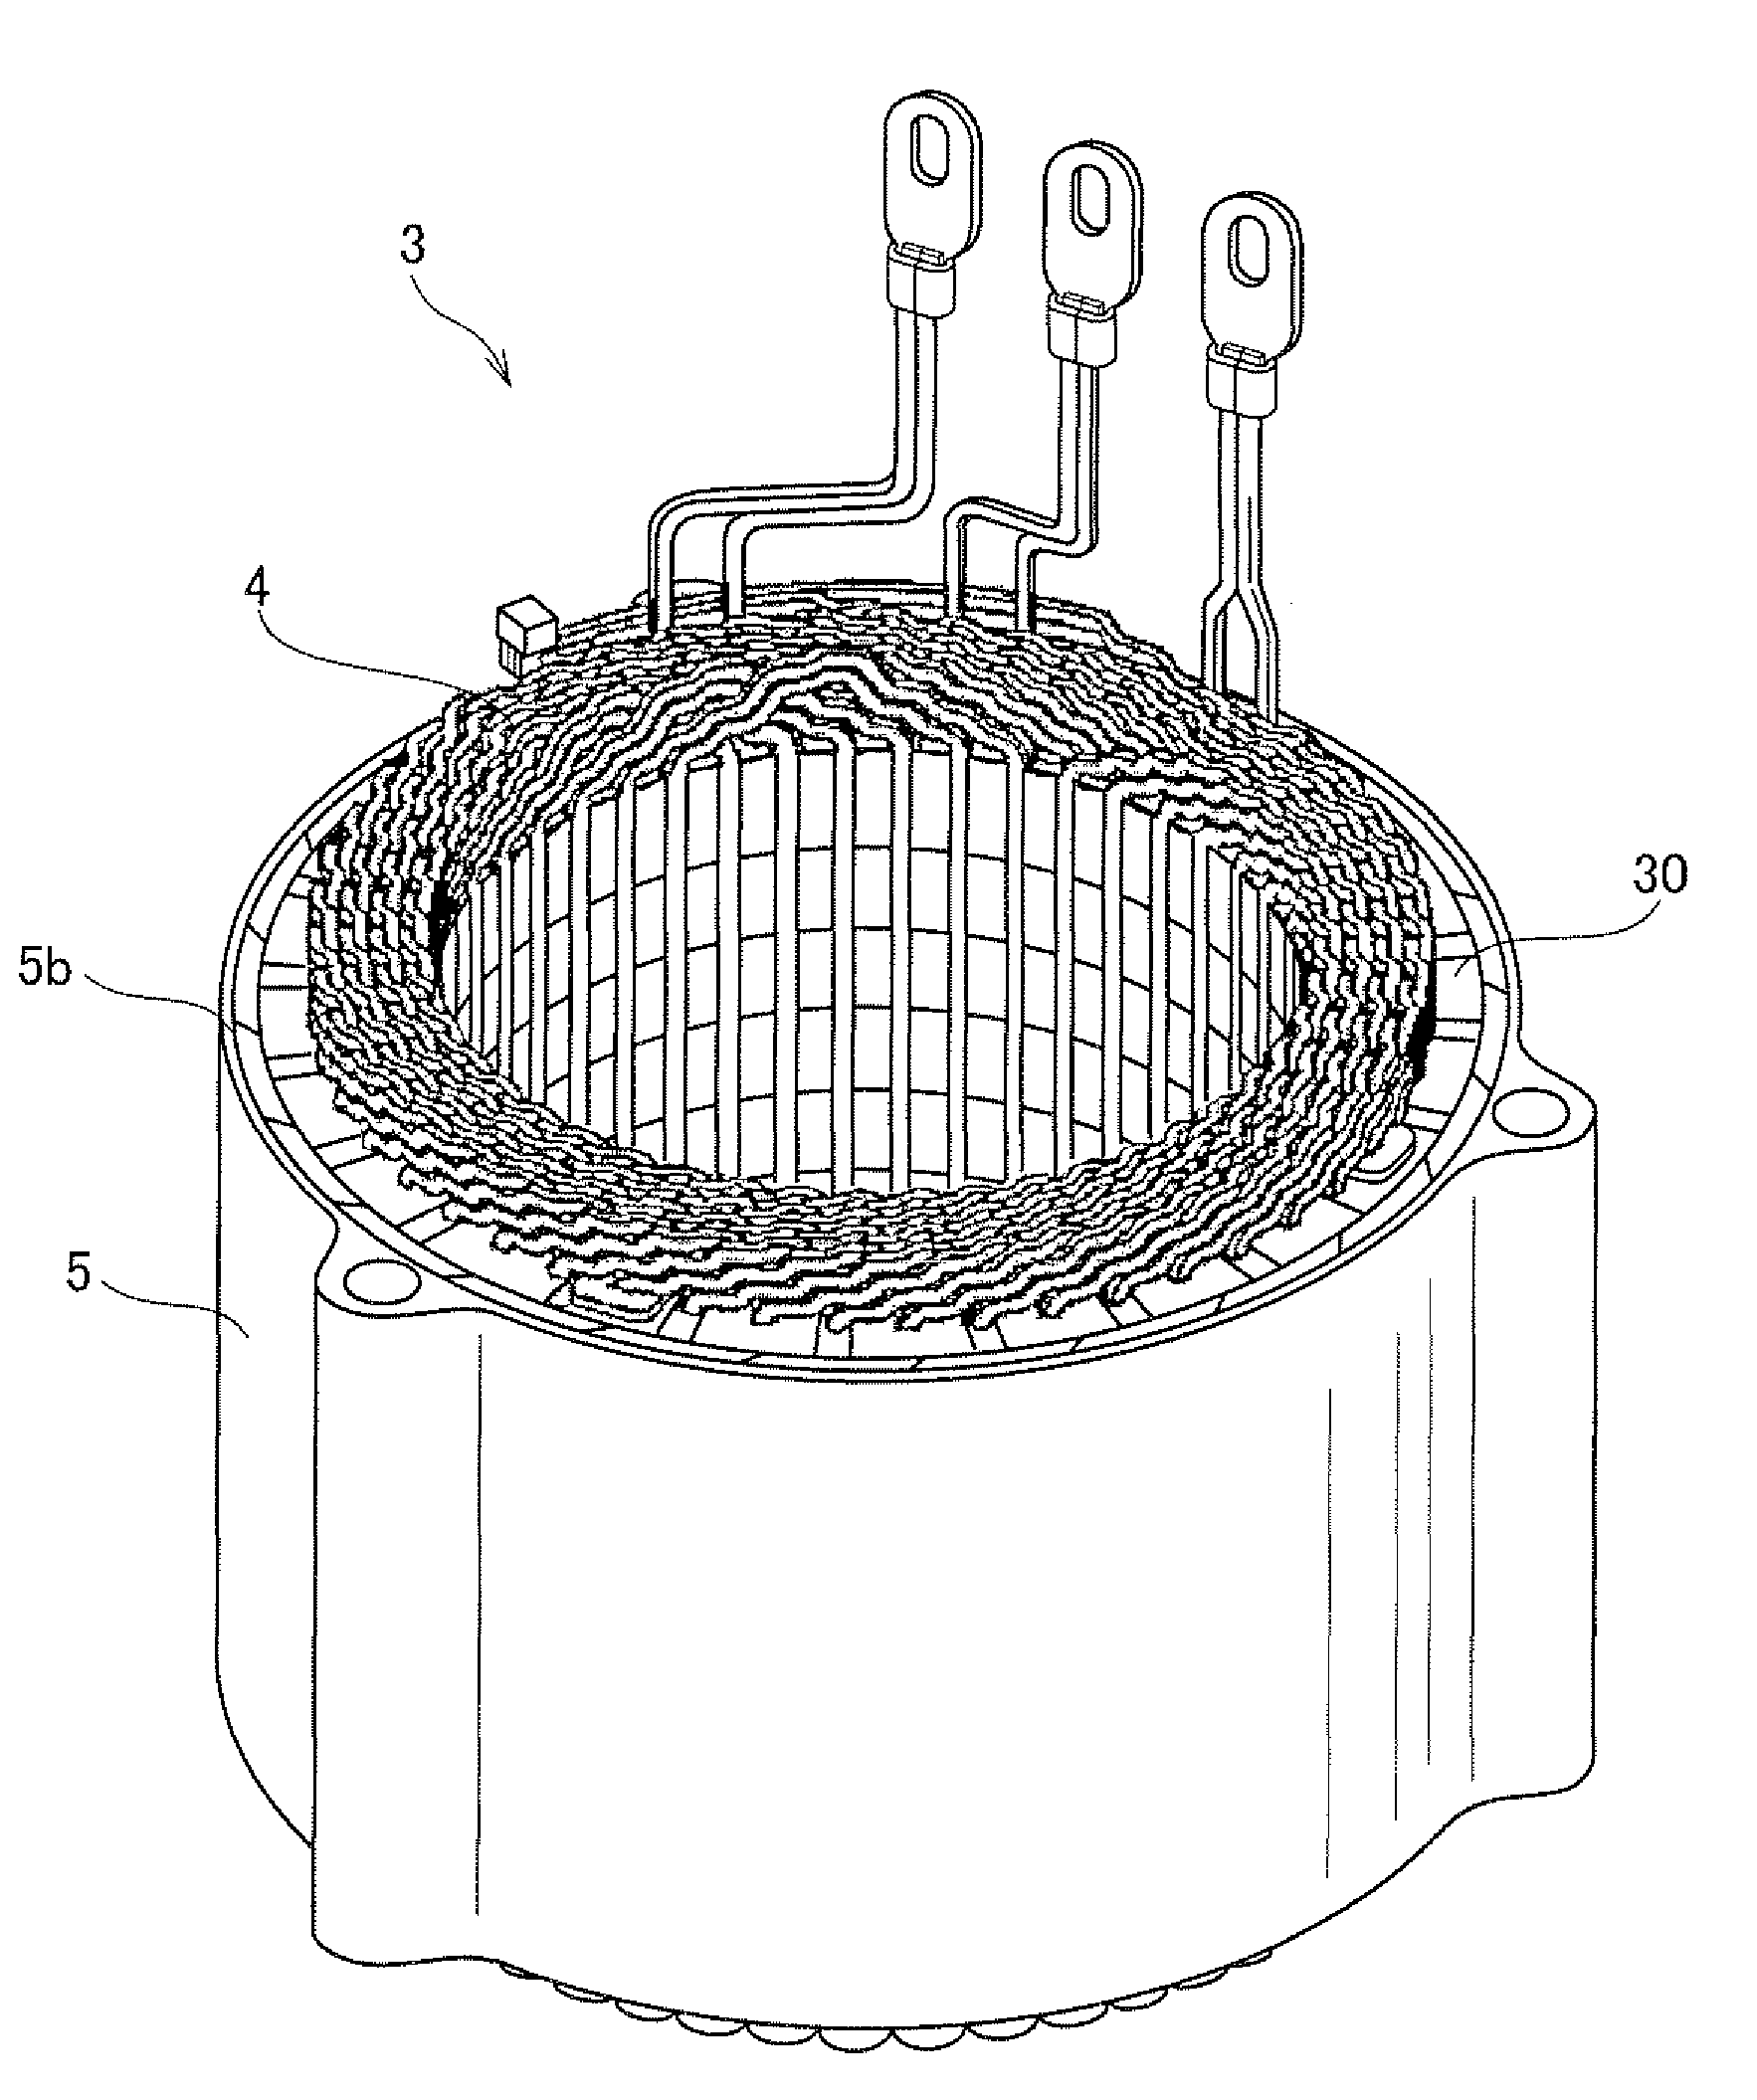 Stator of electric rotating machine